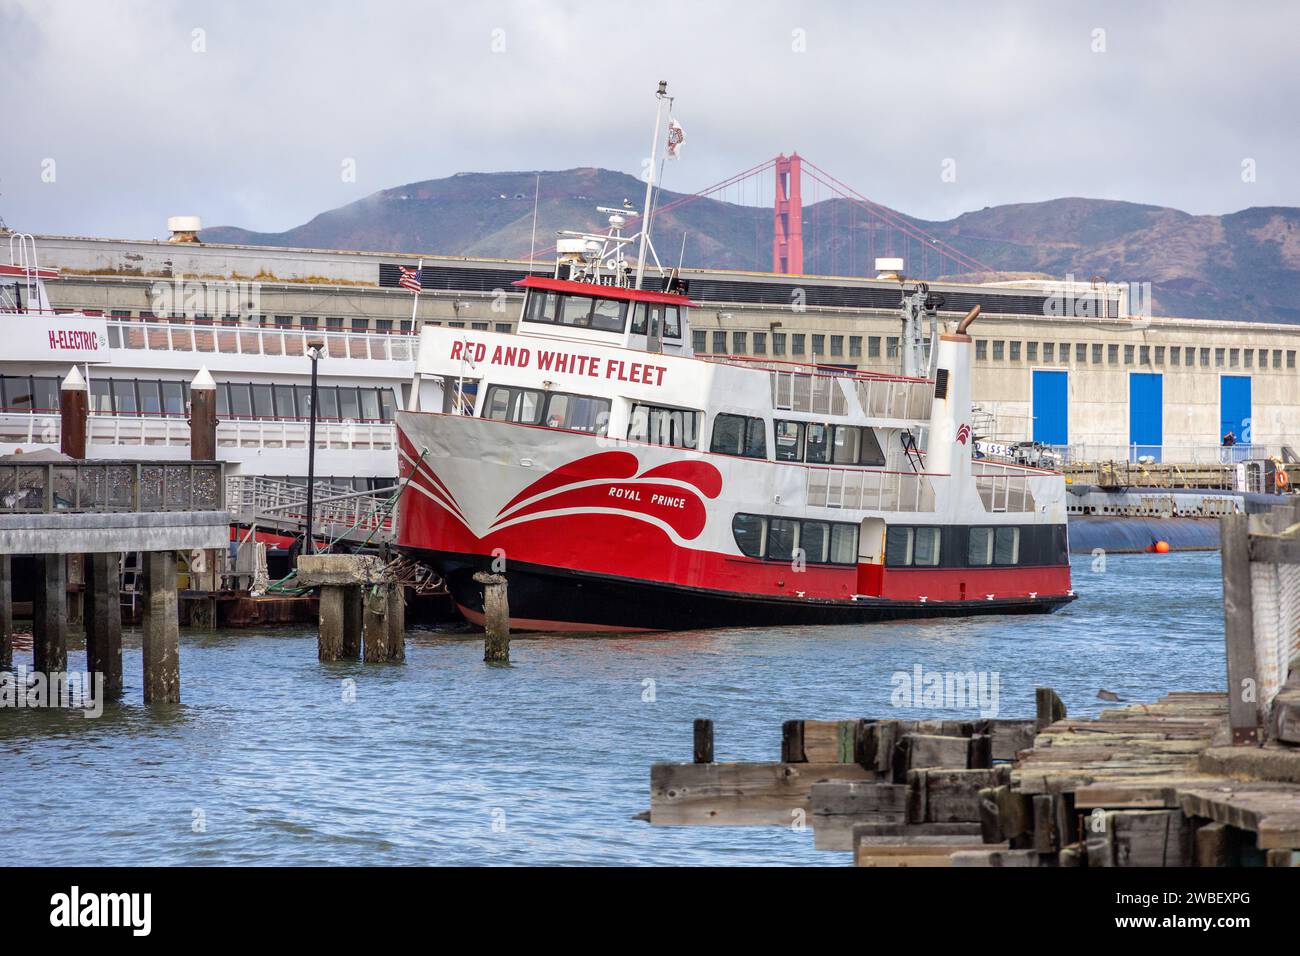 Red and White Fleet Tourist Boat Royal Prince à San Francisco, le 24 juin 2023 Banque D'Images